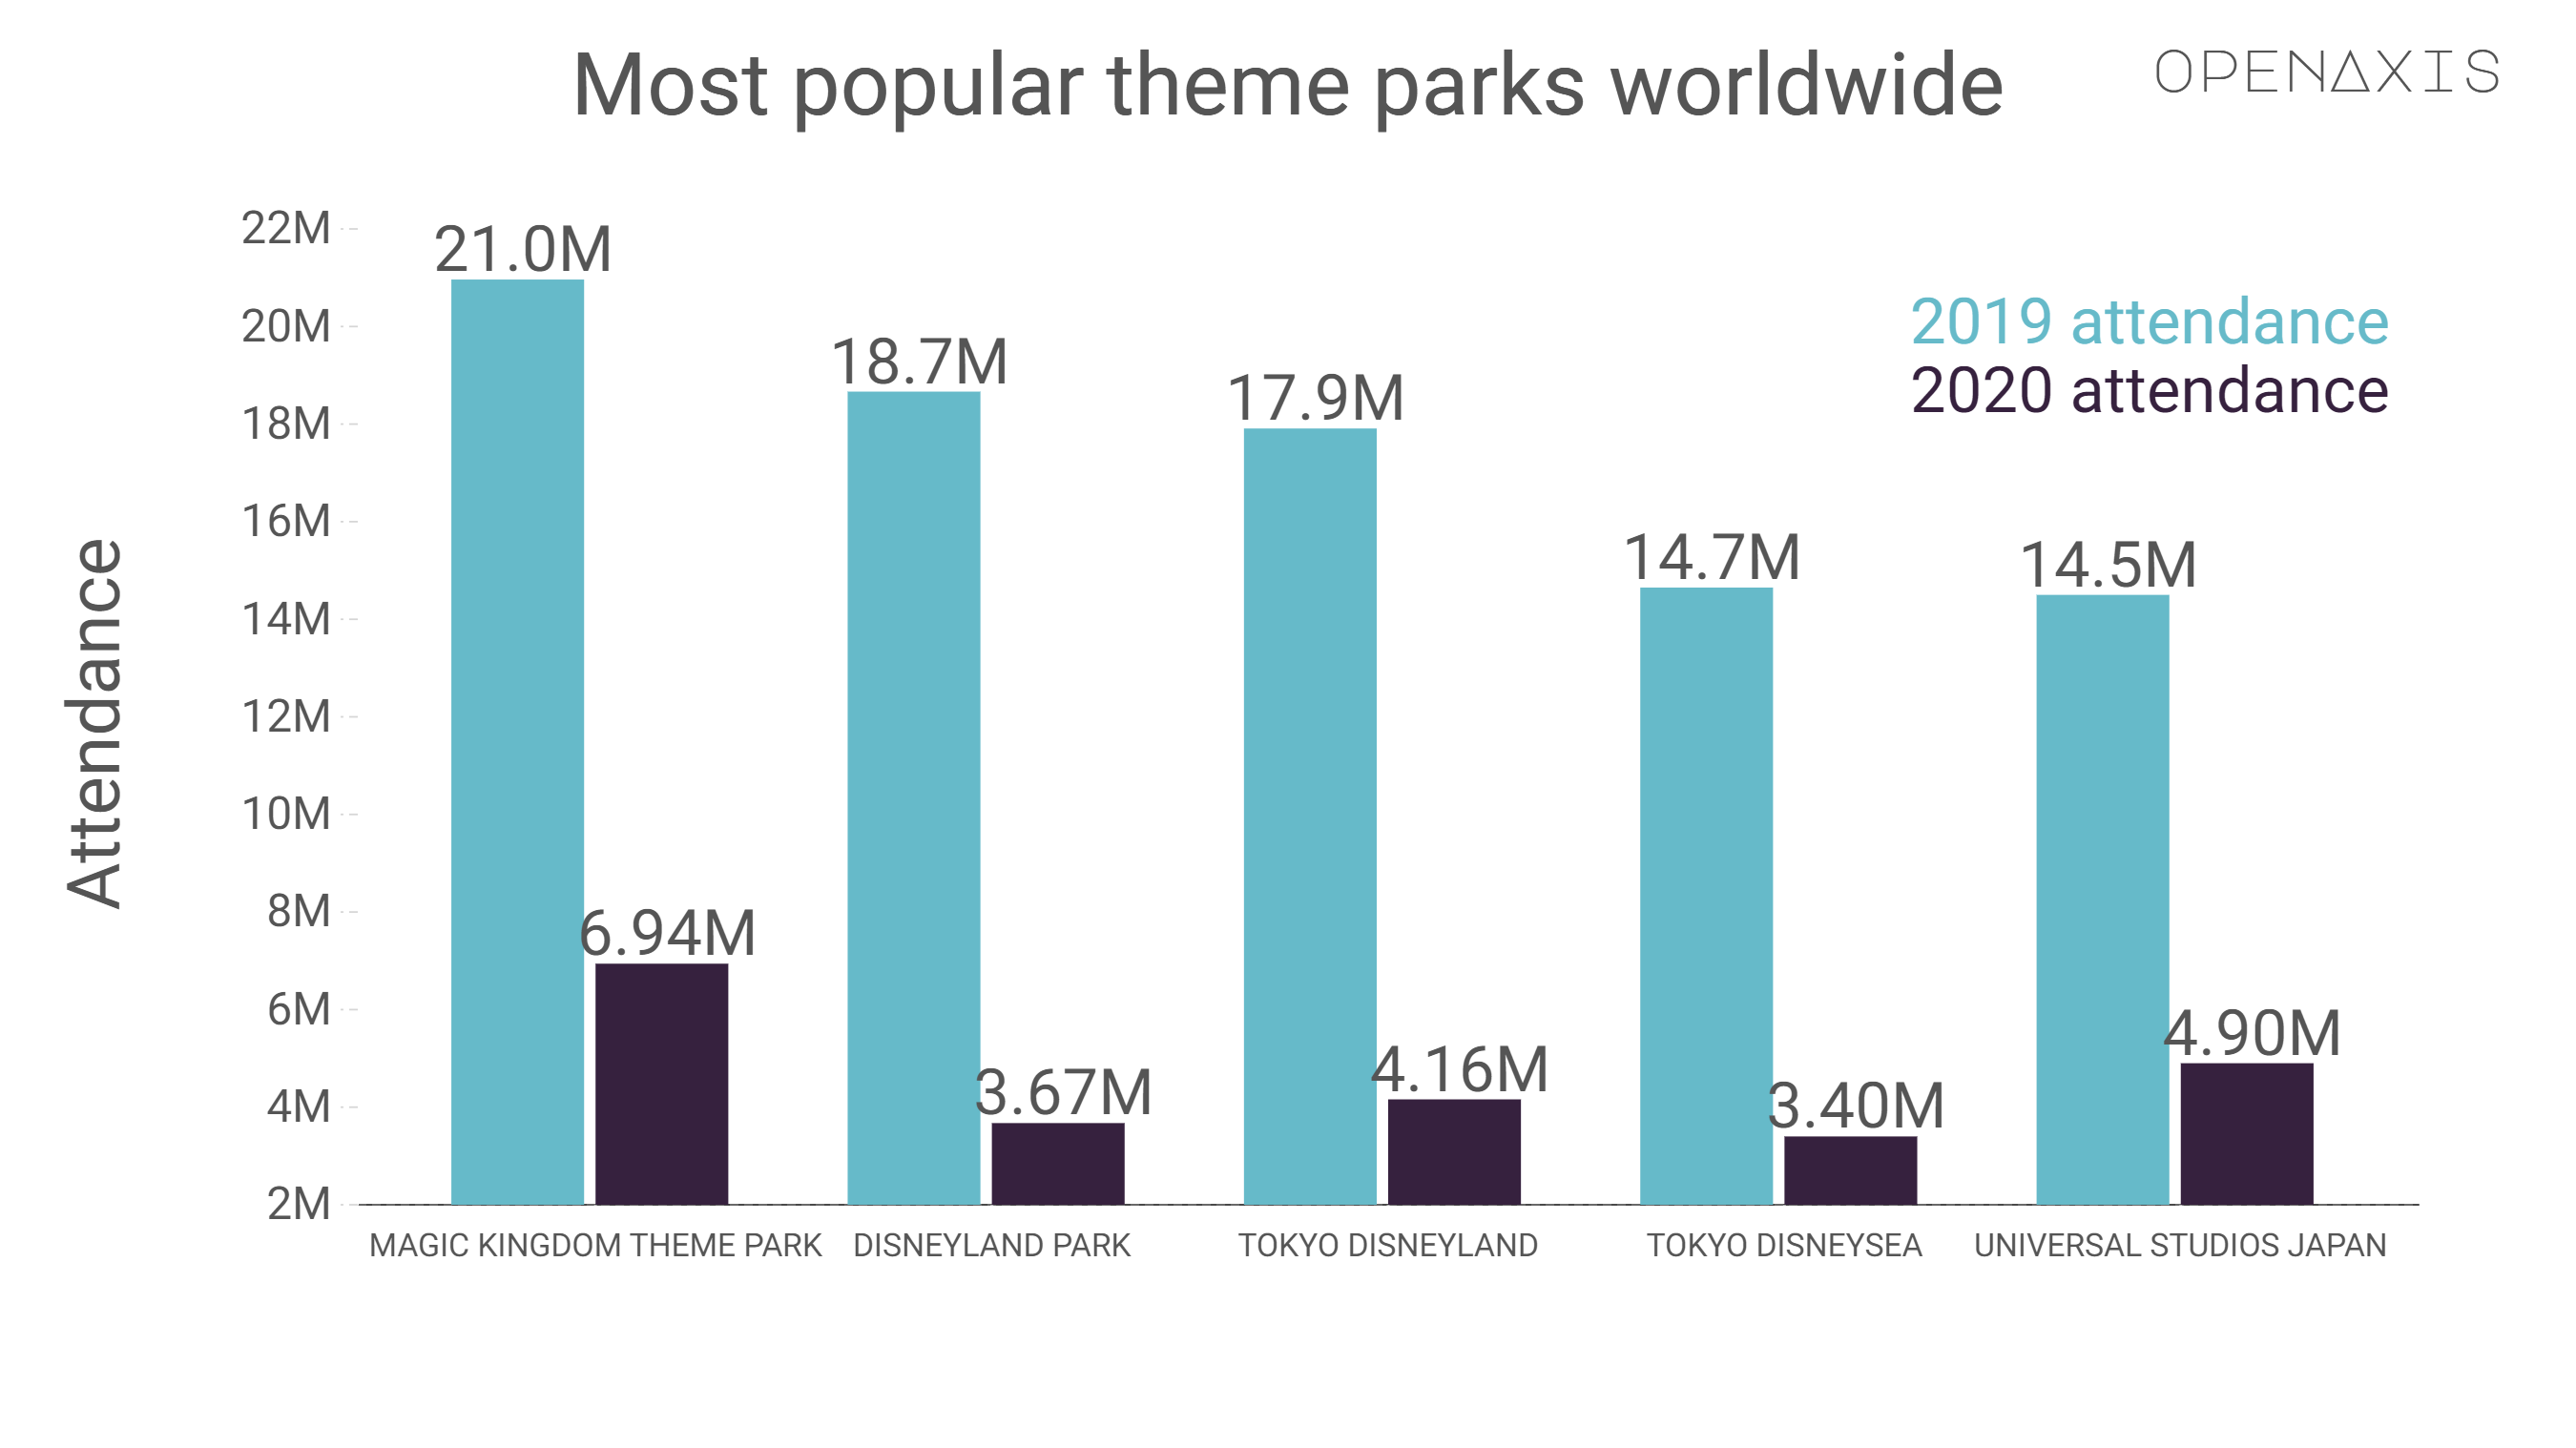 "Most popular theme parks worldwide"